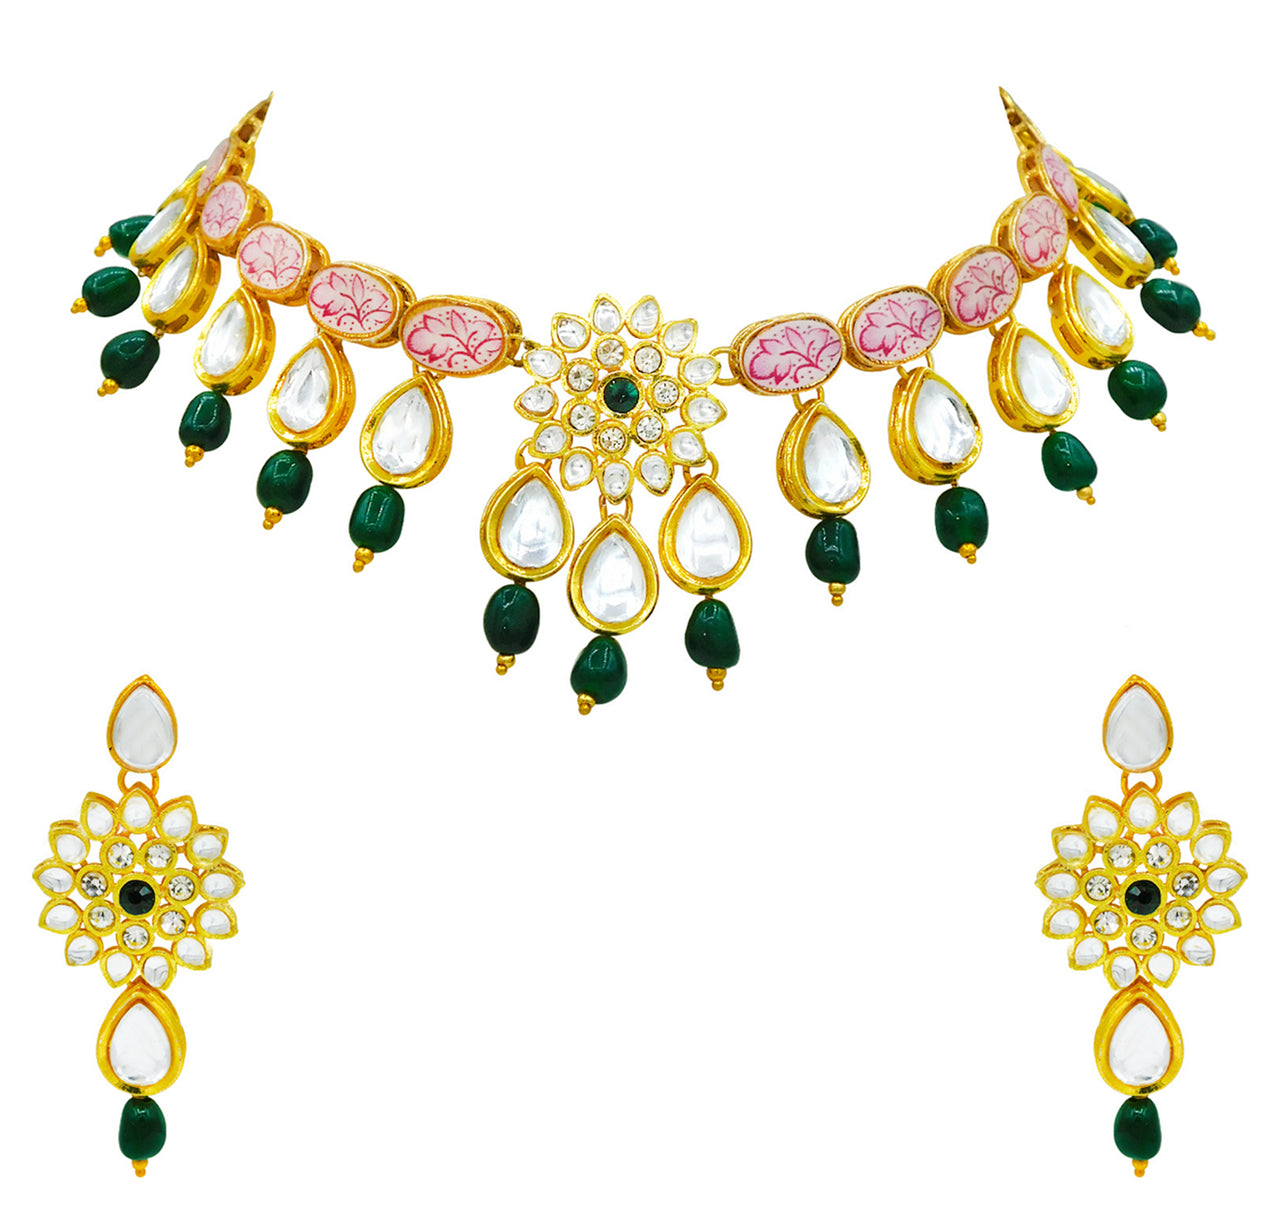 Sujwel Kundan and Painting with Floral Design Chokar Necklace Set (08-0229) - Sujwel